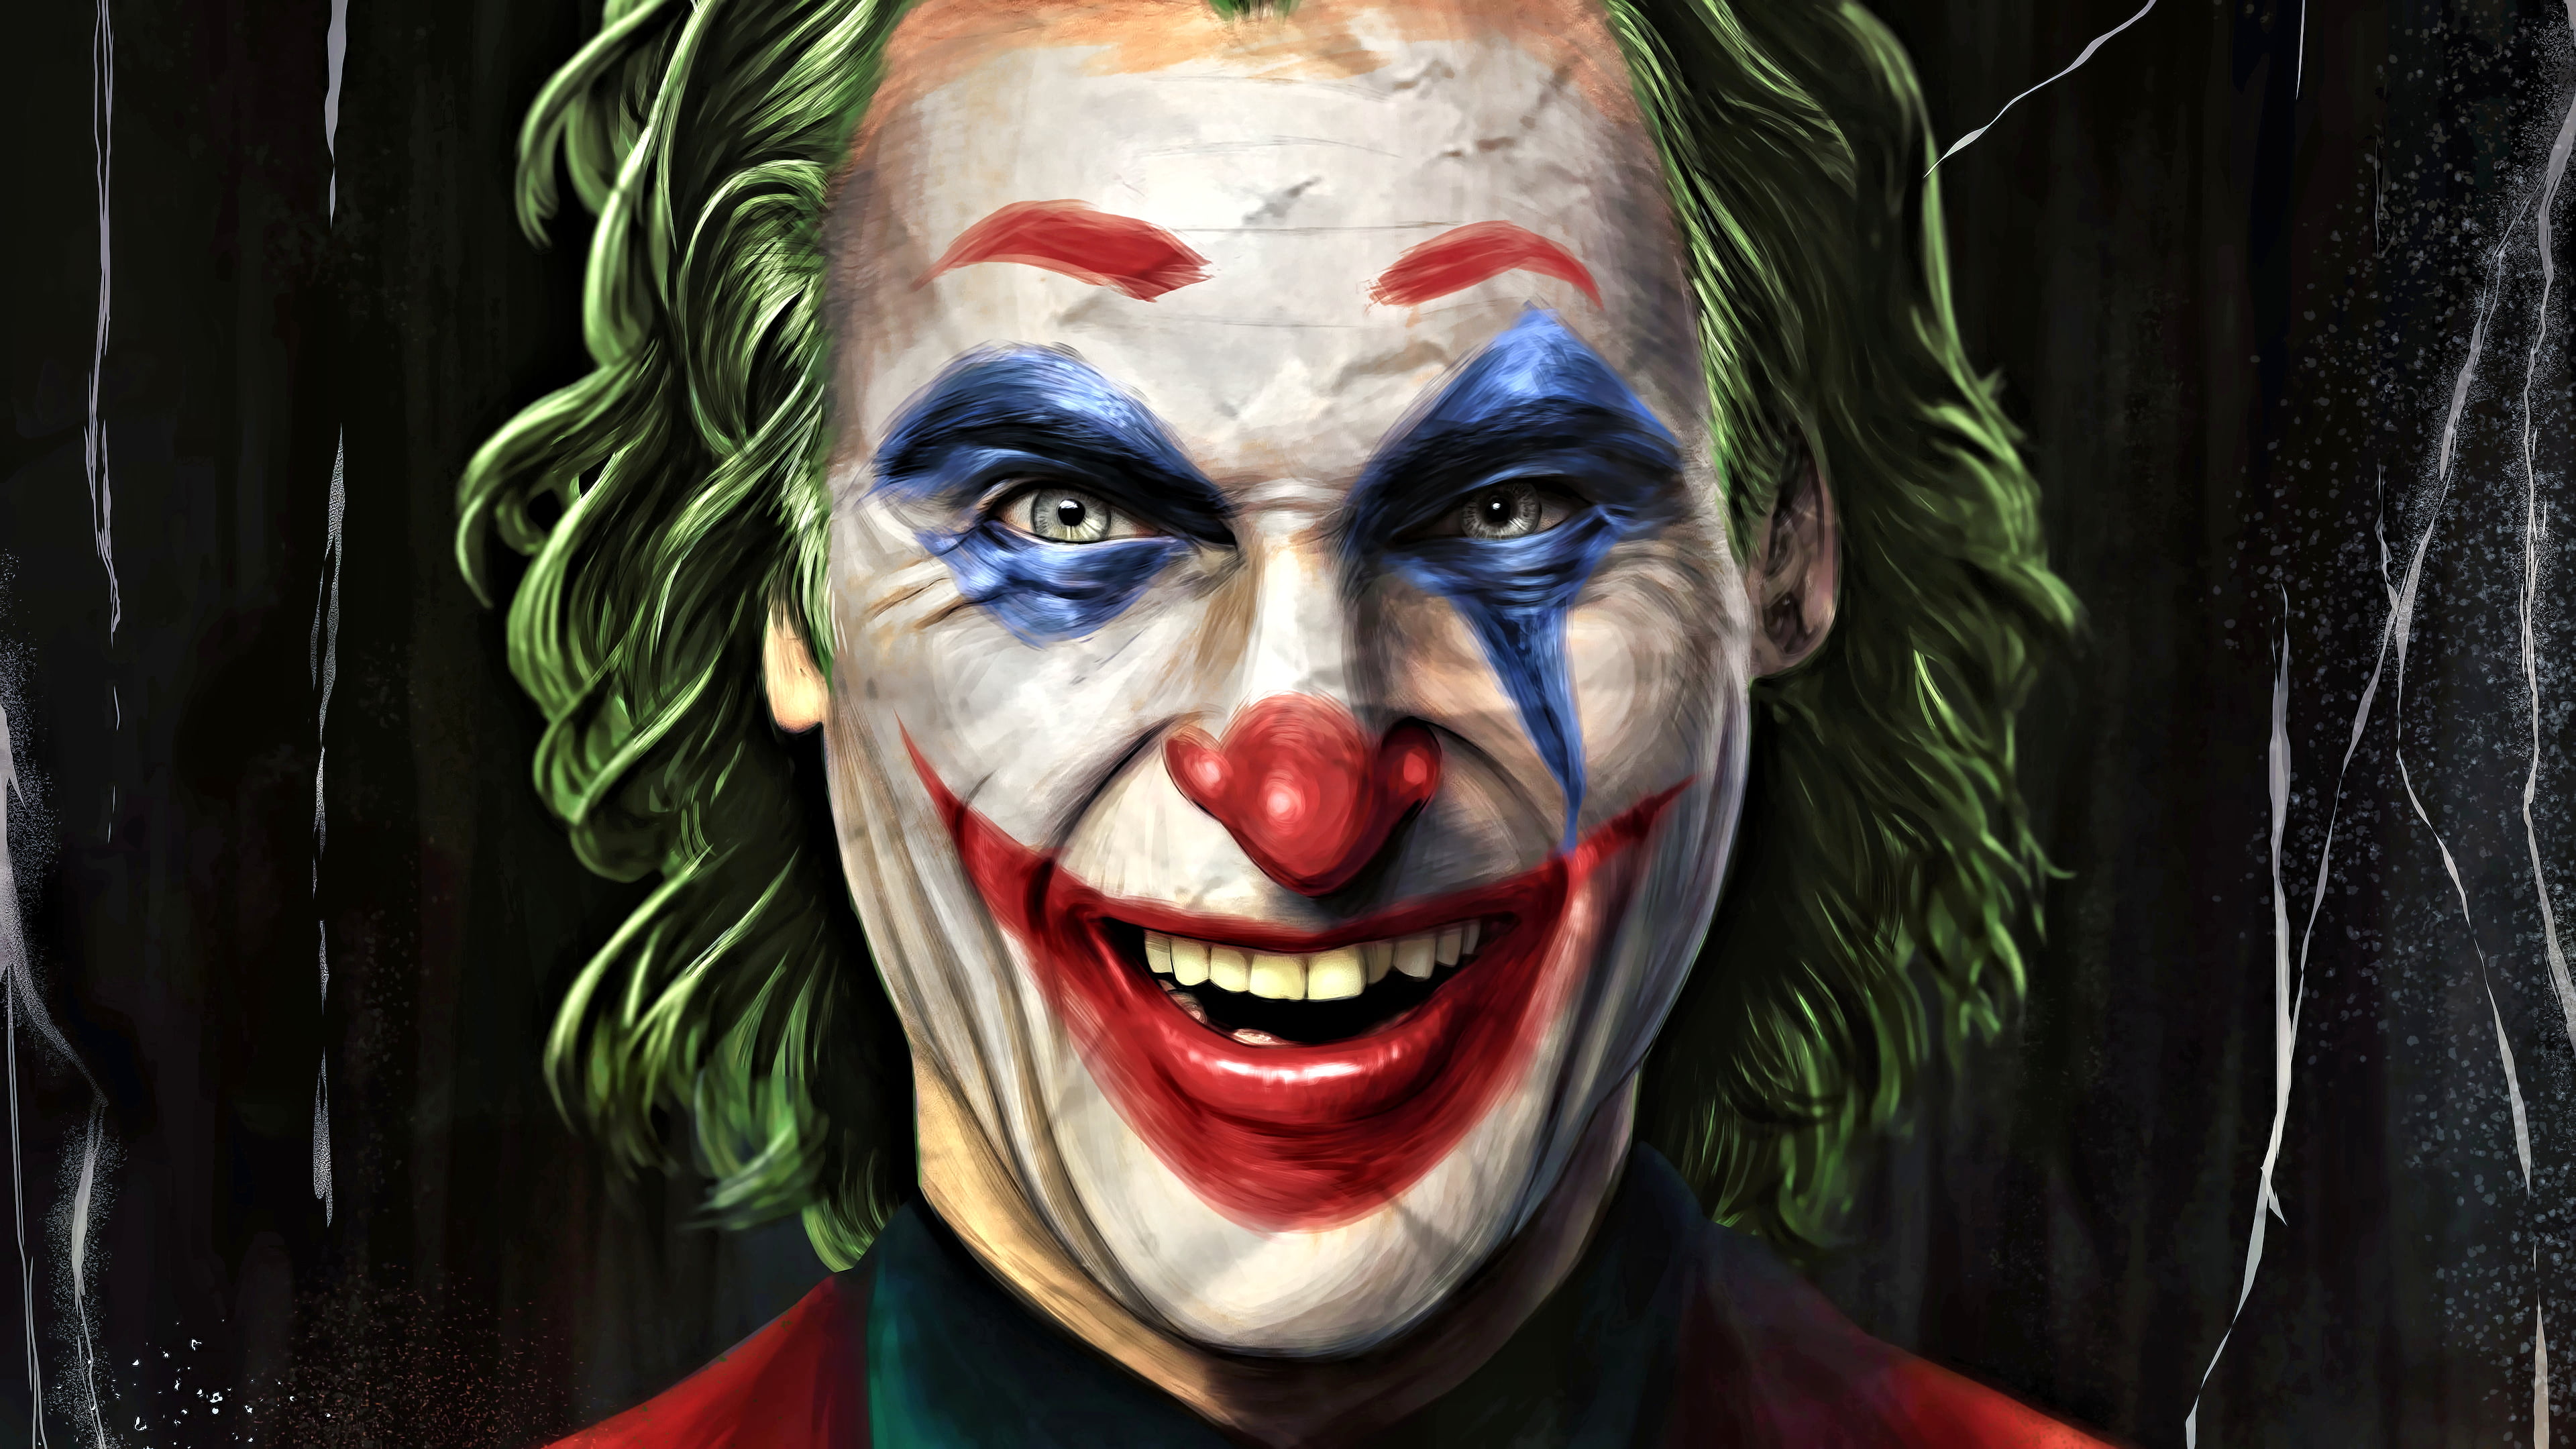 Joker (2019 Movie), Gotham City, paint brushes, DC Comics, Batman